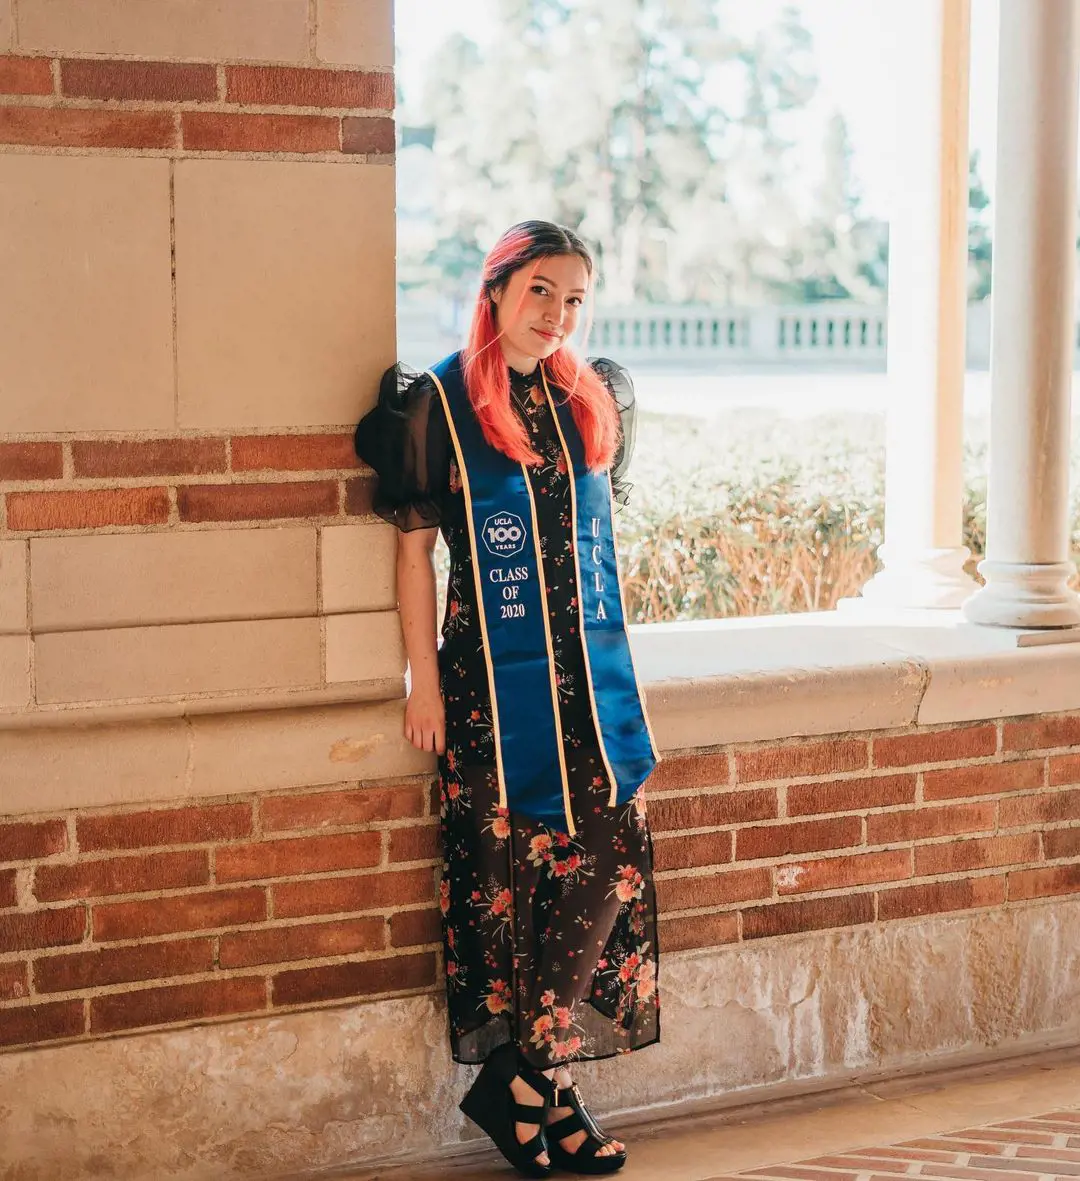 Tori graduated as the class of 2020 in June 14 2020